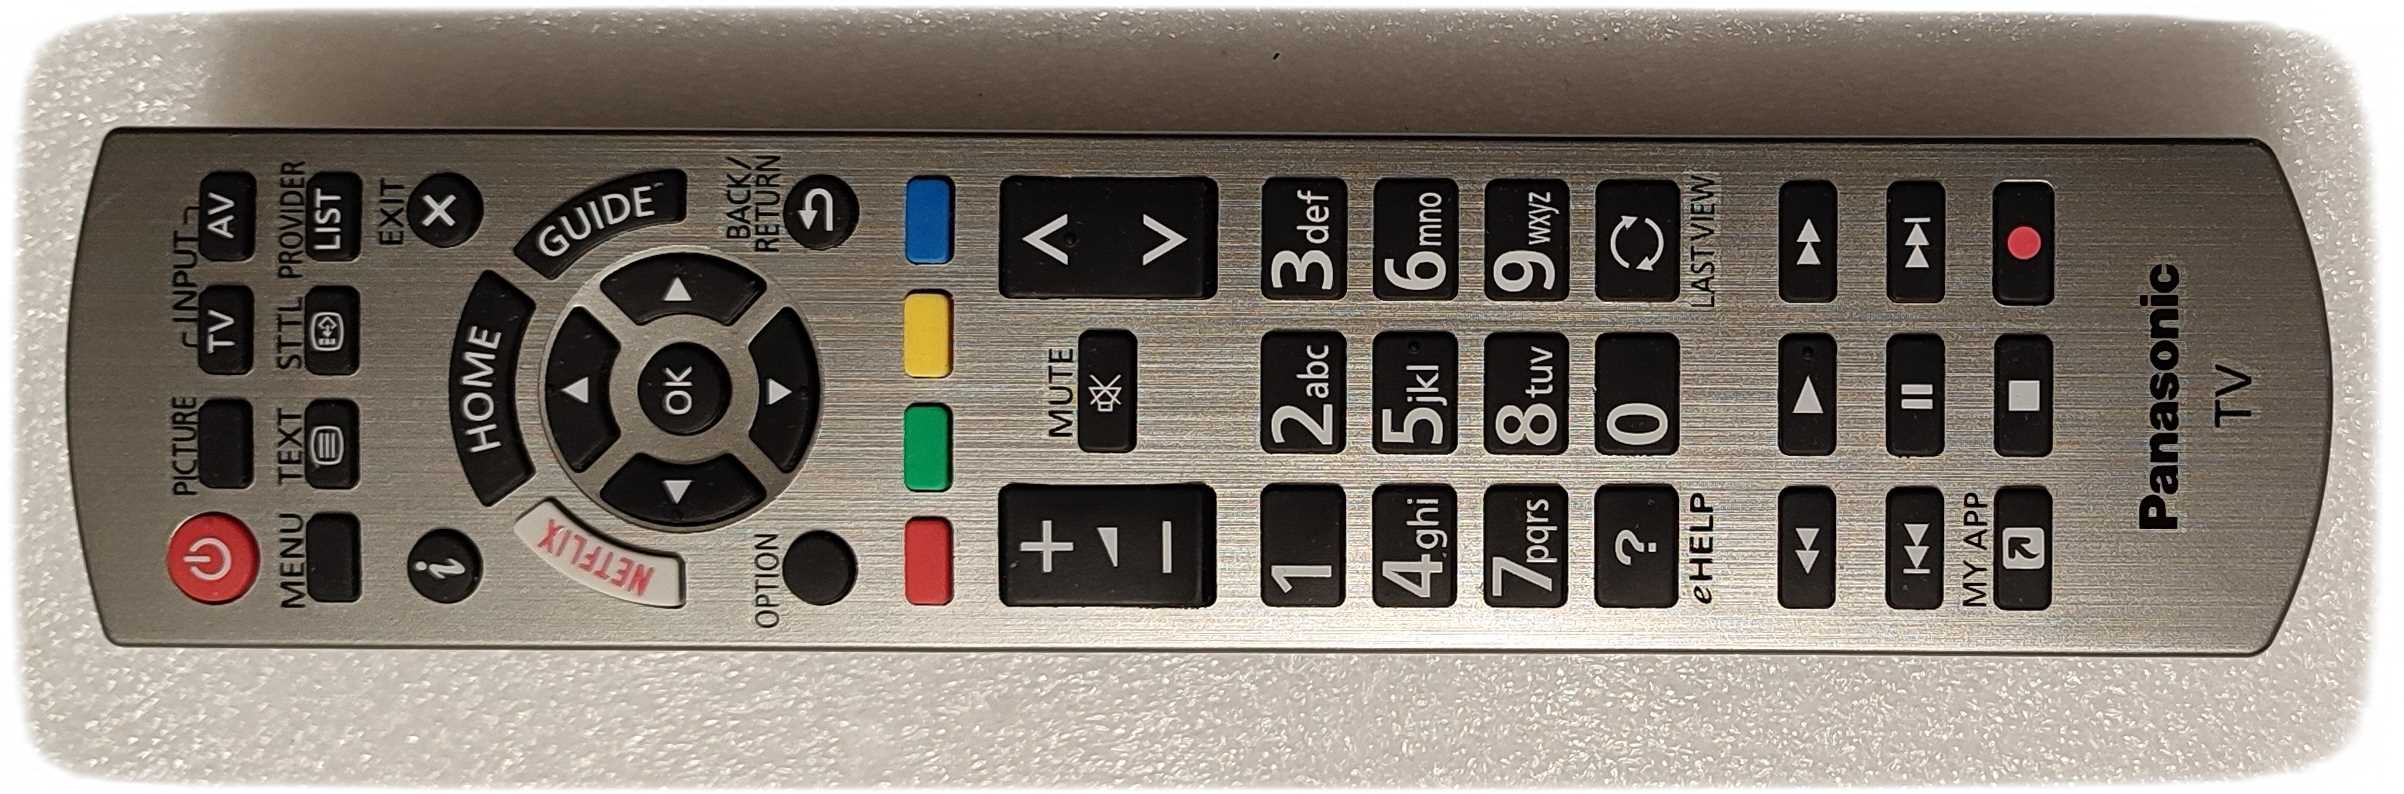 N2QAYB001247 - Panasonic TV Remote Control TX-58HX810E - TV Modules